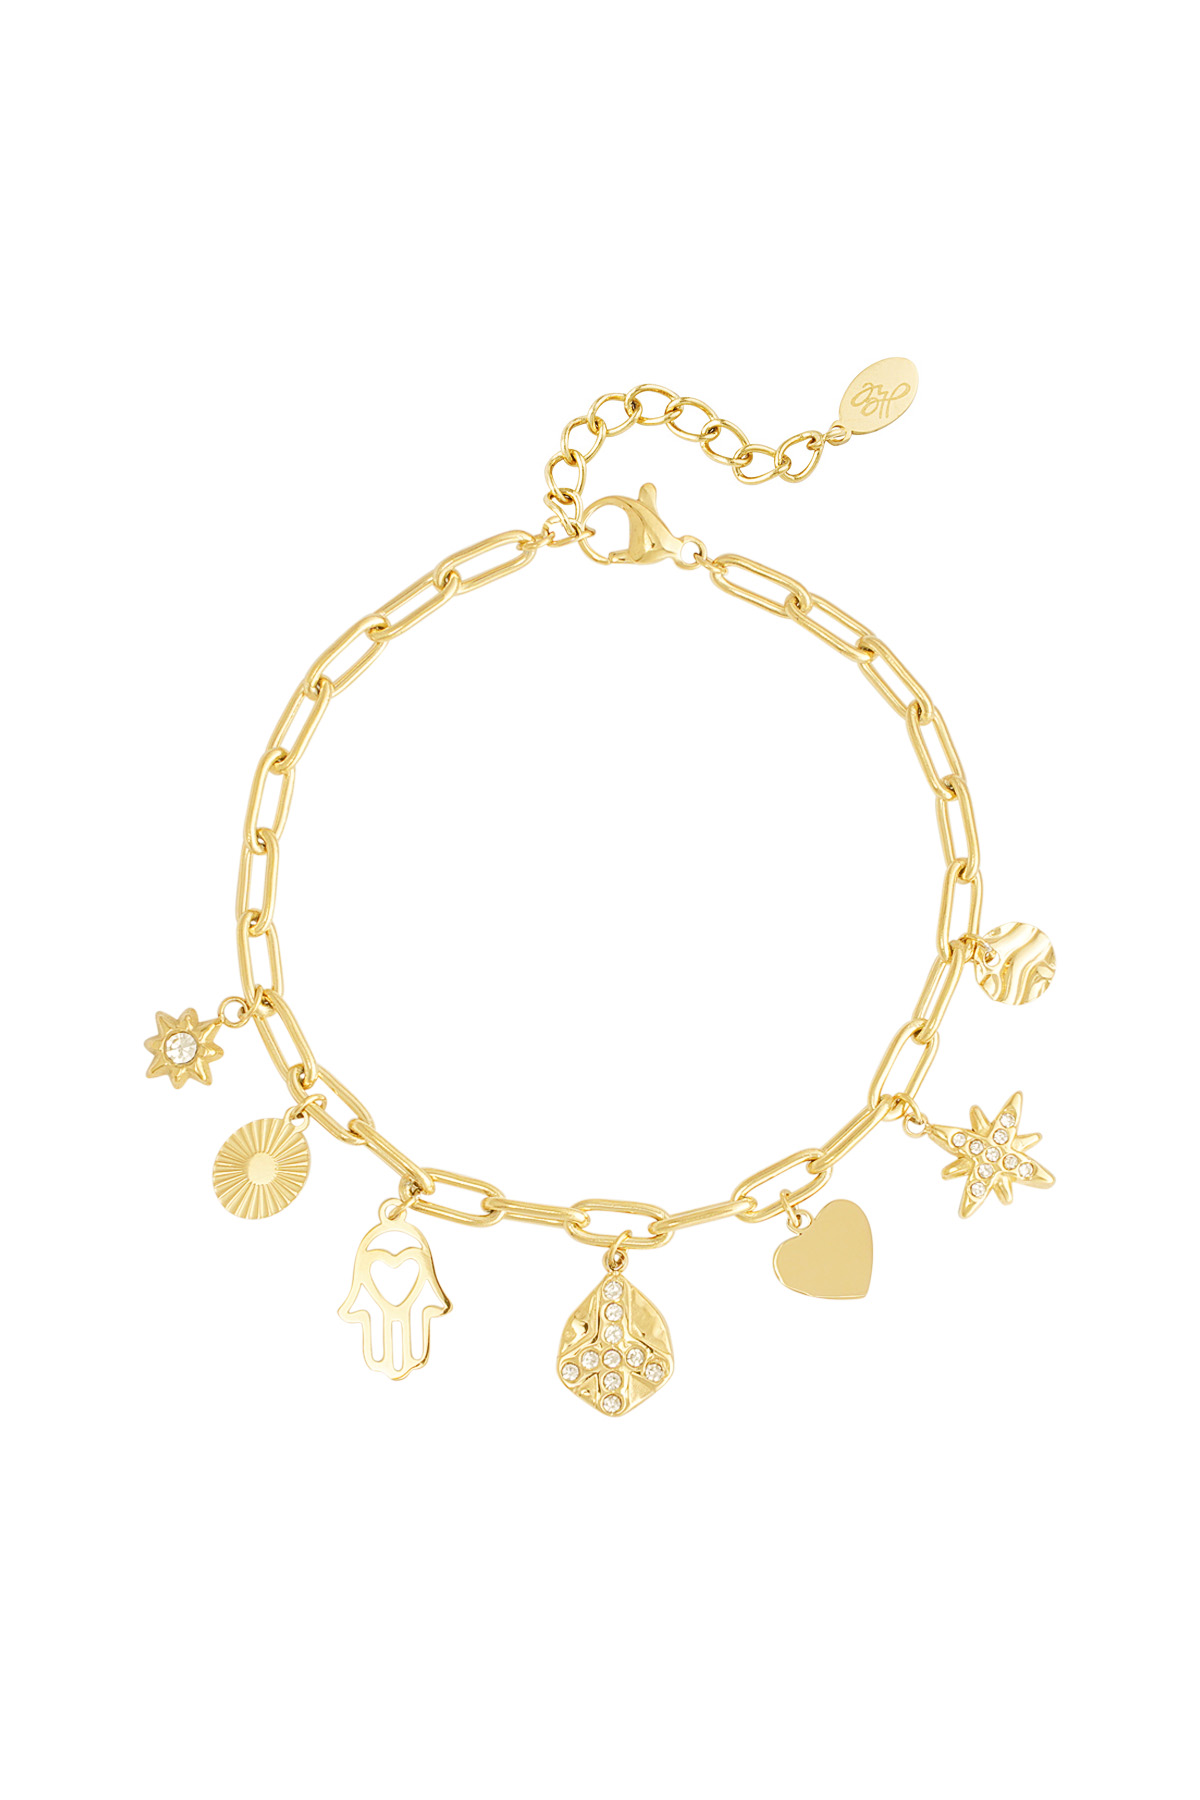 Holy life charm bracelet - gold